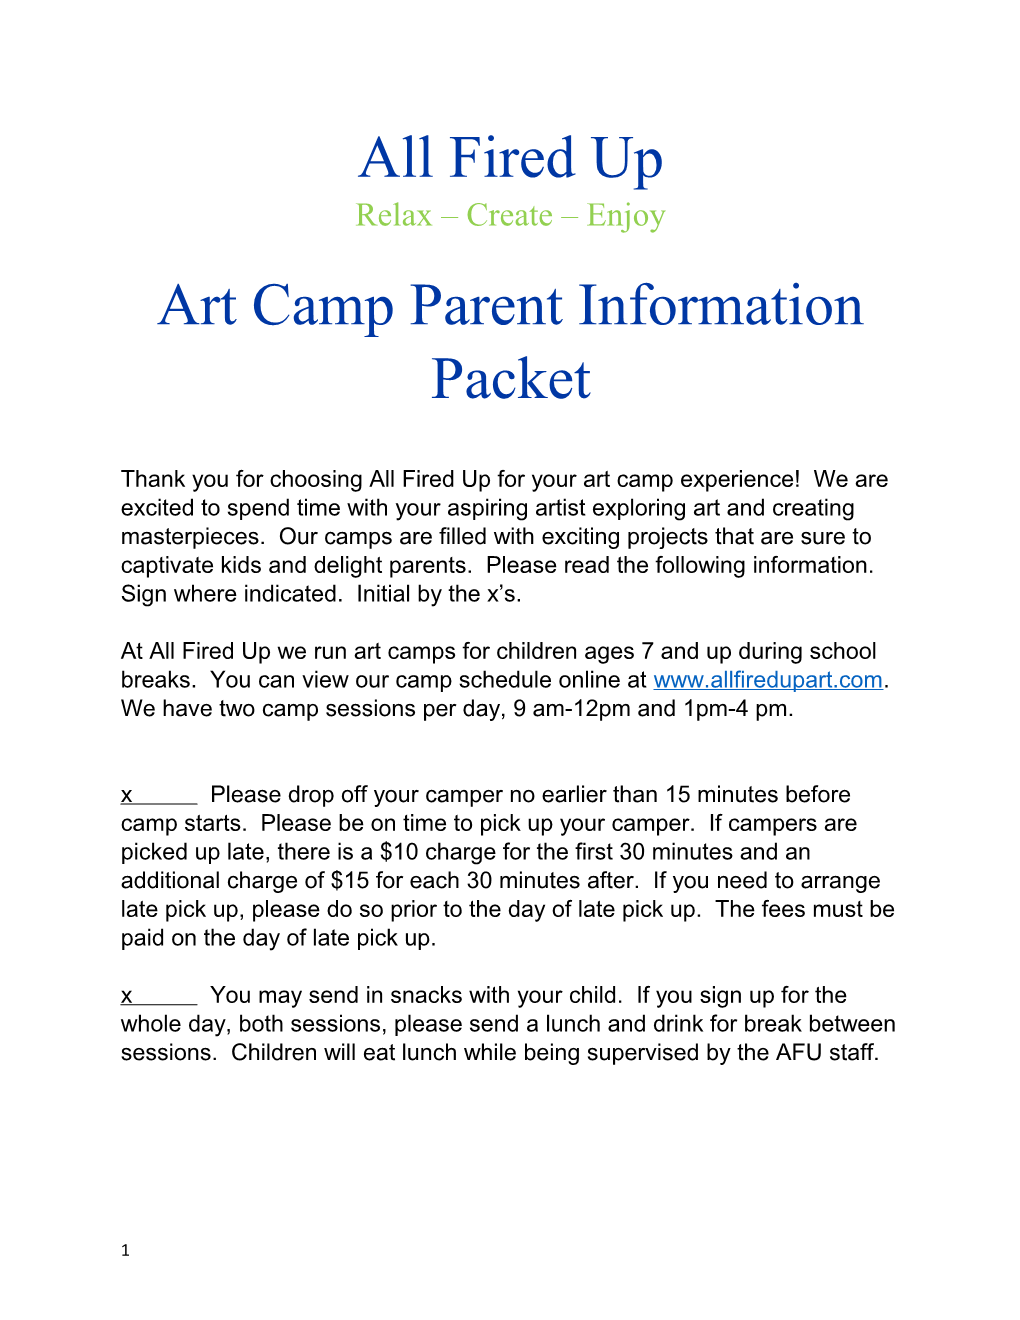 Art Camp Parent Information Packet